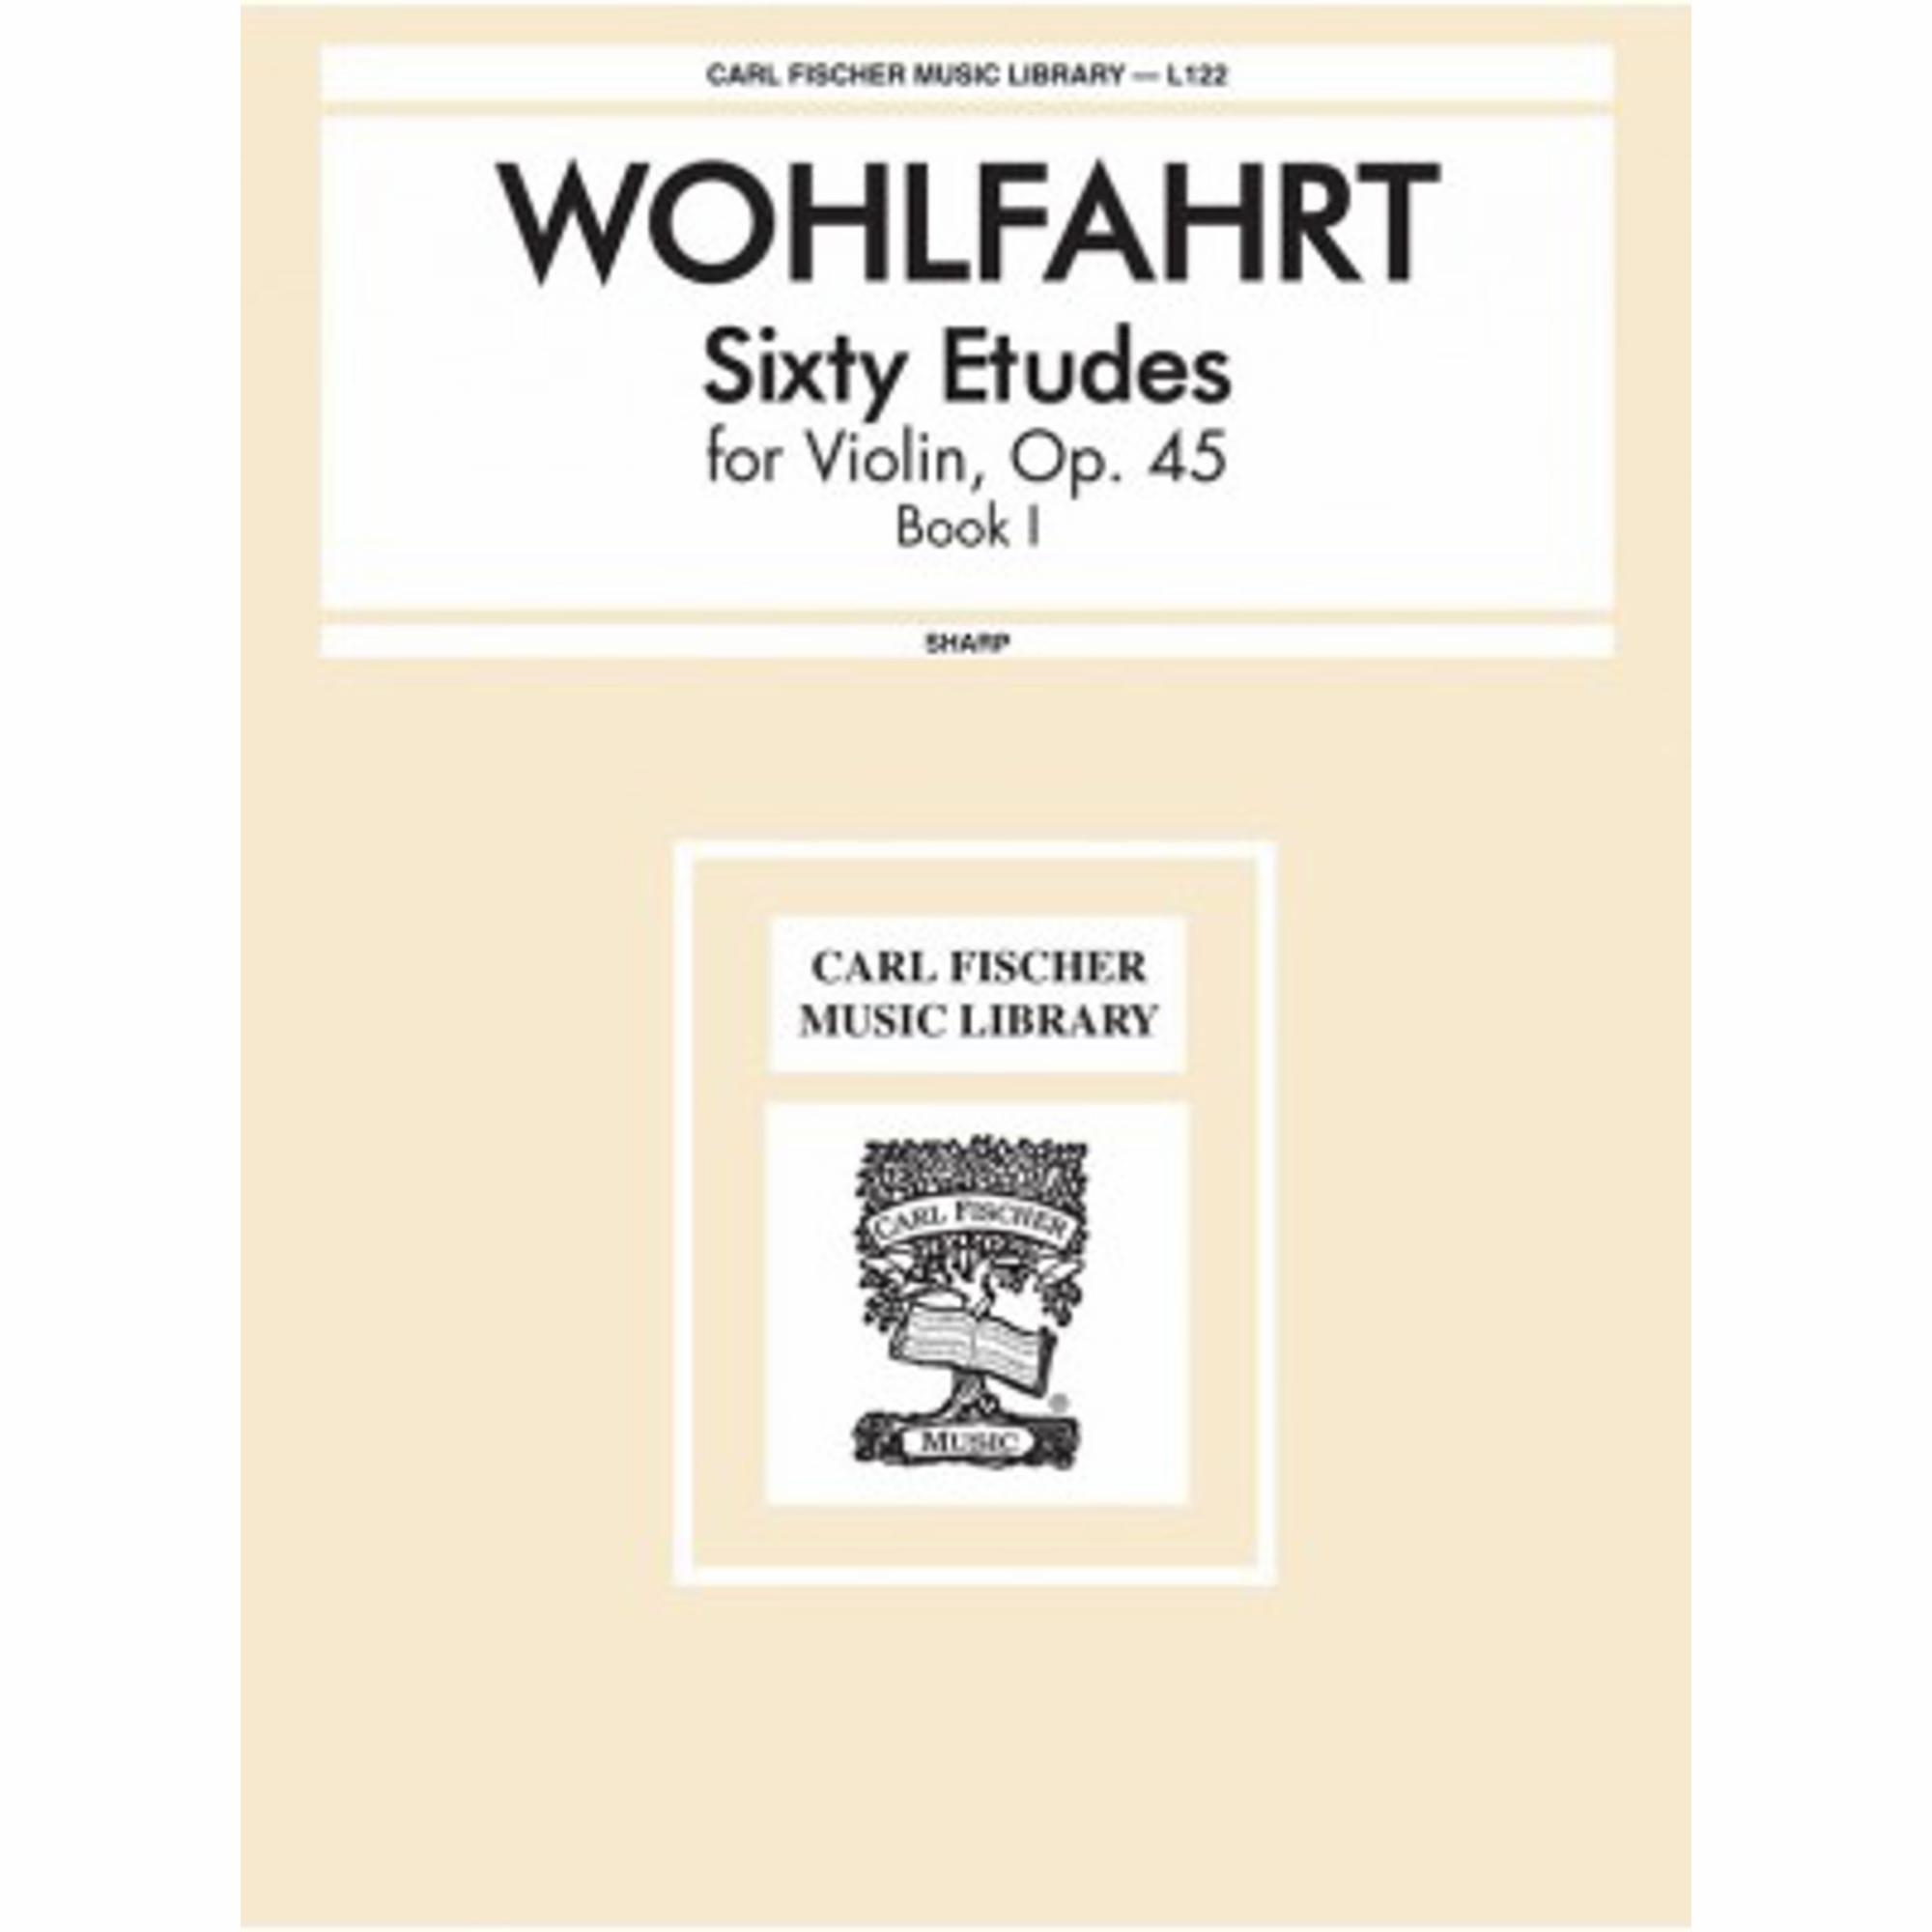 Wohlfahrt -- Sixty Etudes, Op. 45, Books 1-2 for Violin